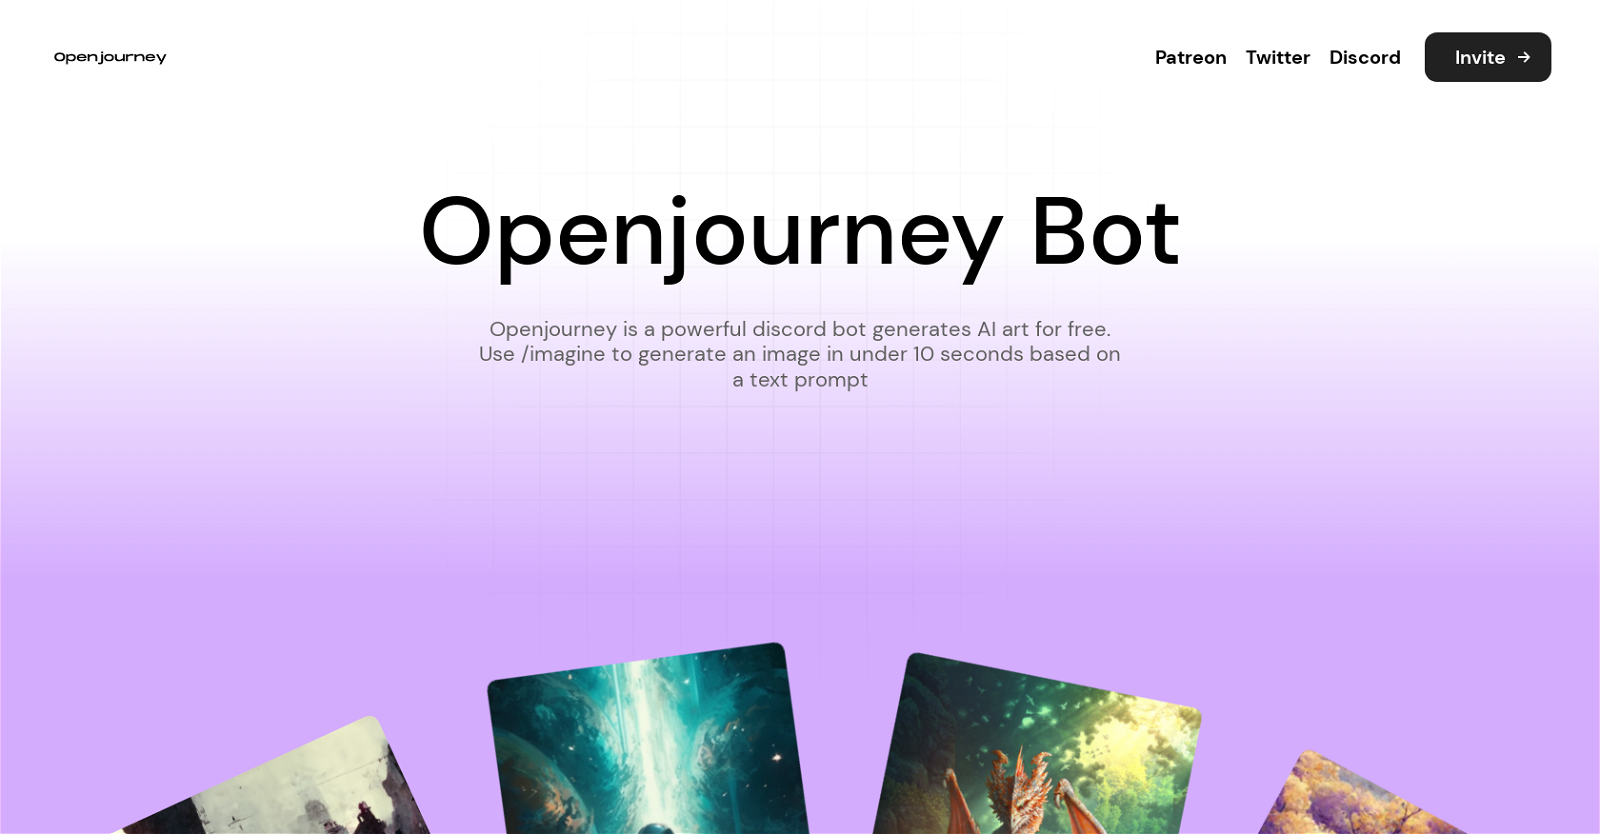 Openjourney Bot website